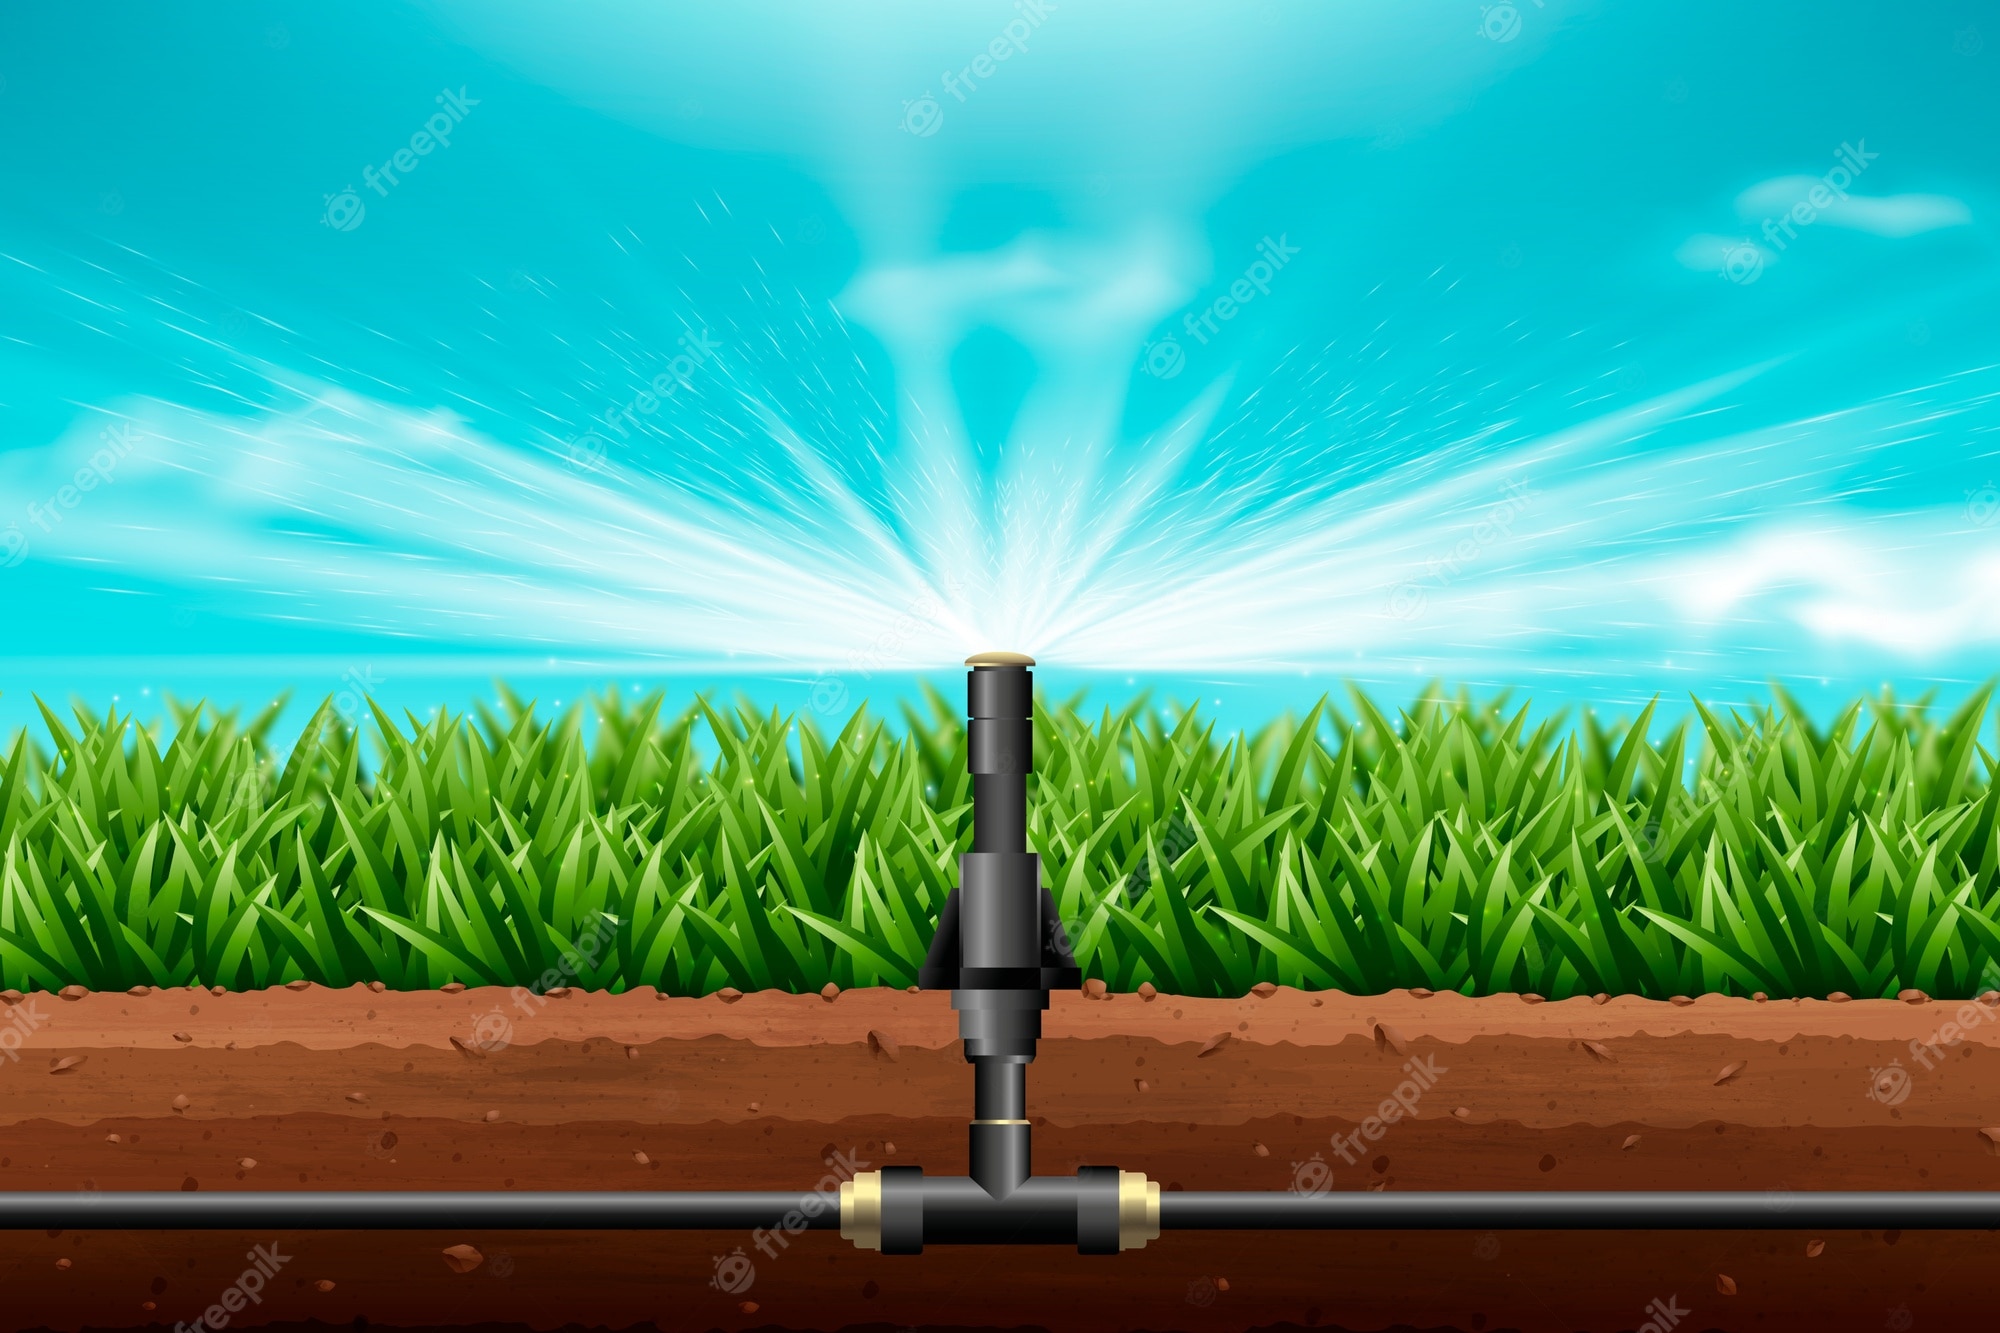 4-800-farm-irrigation-illustrations-royalty-free-vector-graphics